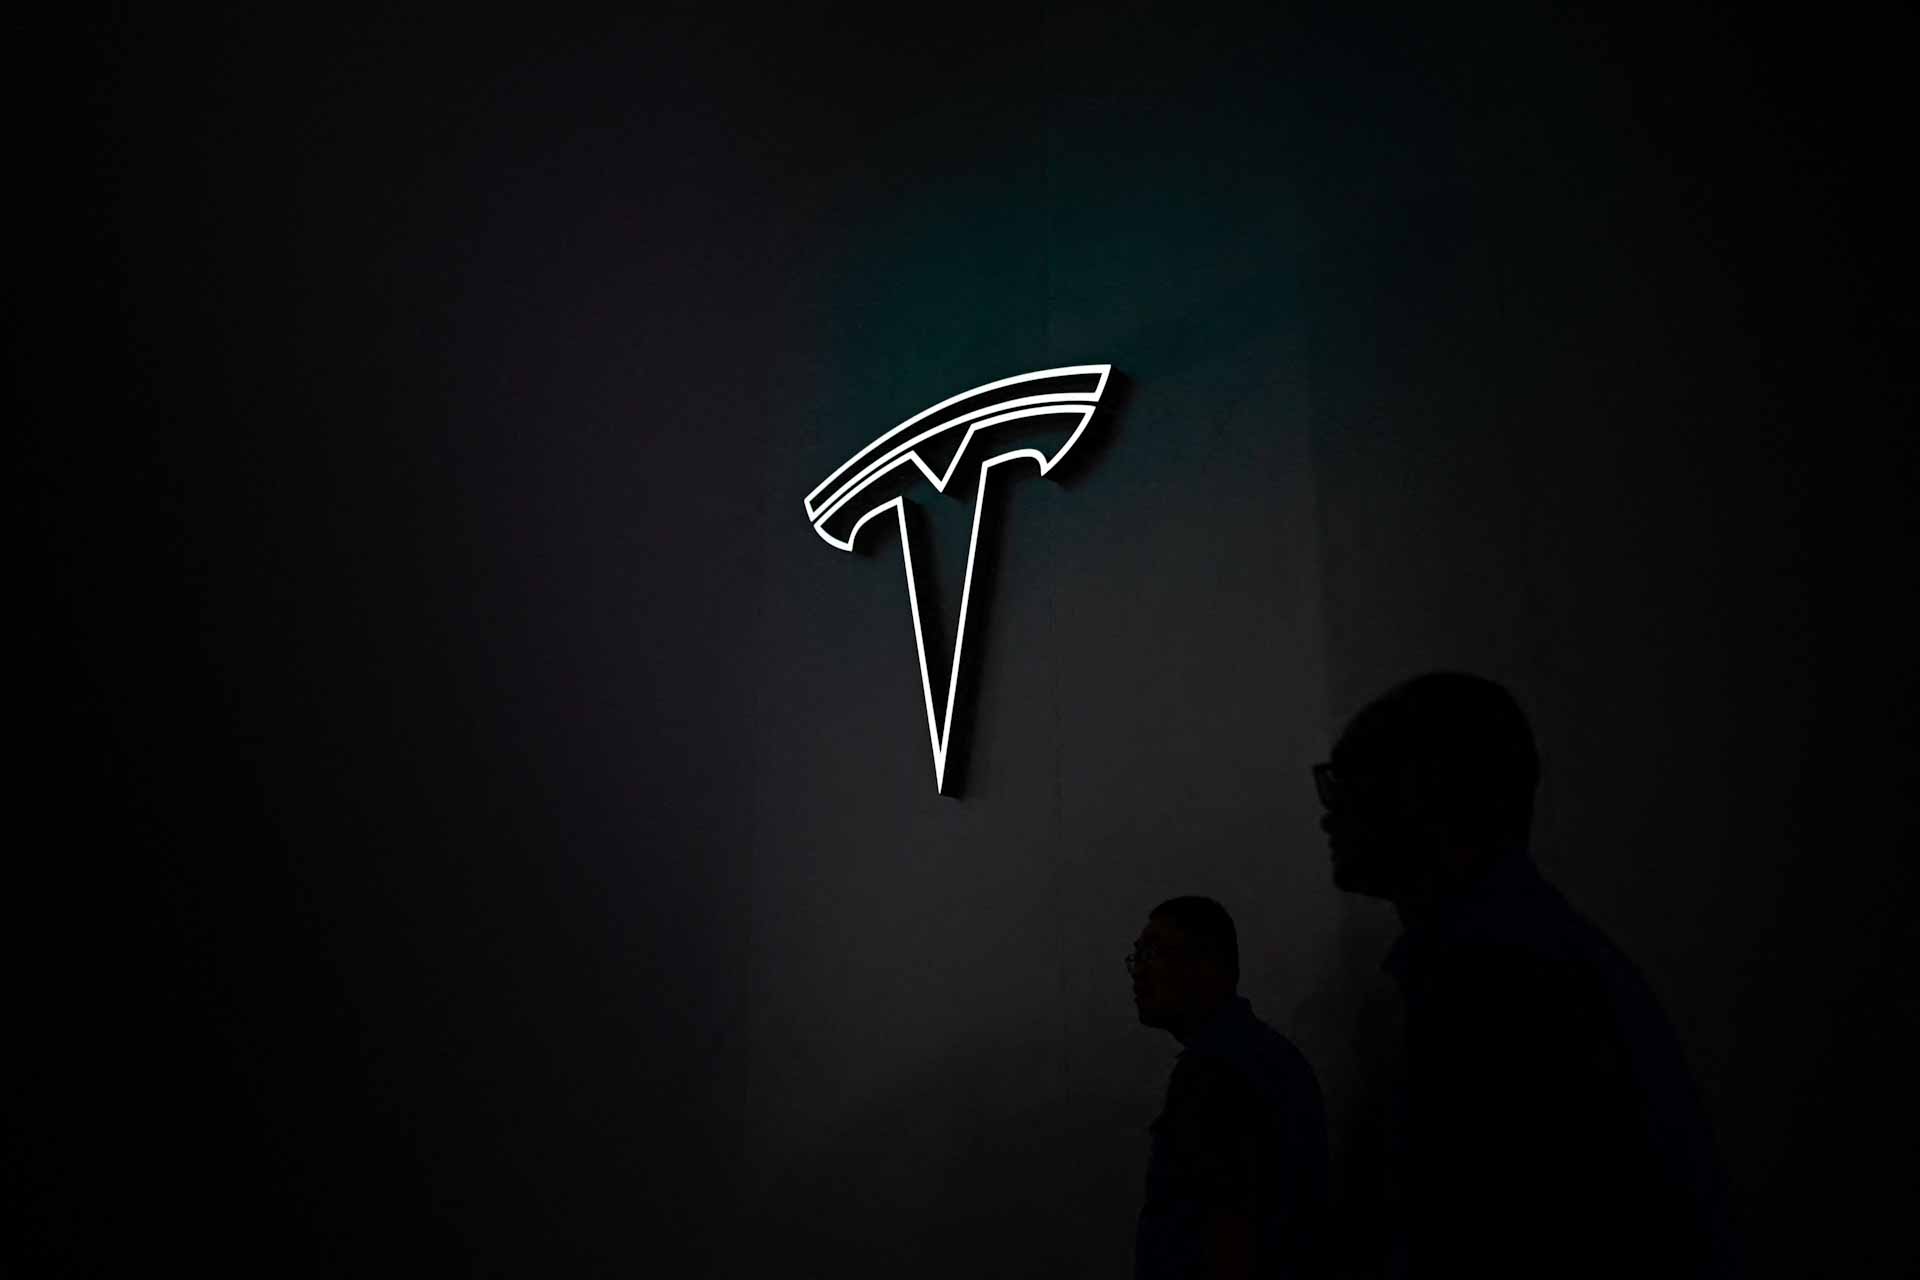 Elon Musk Seeks Tesla Shareholder Vote on Moving Incorporation To